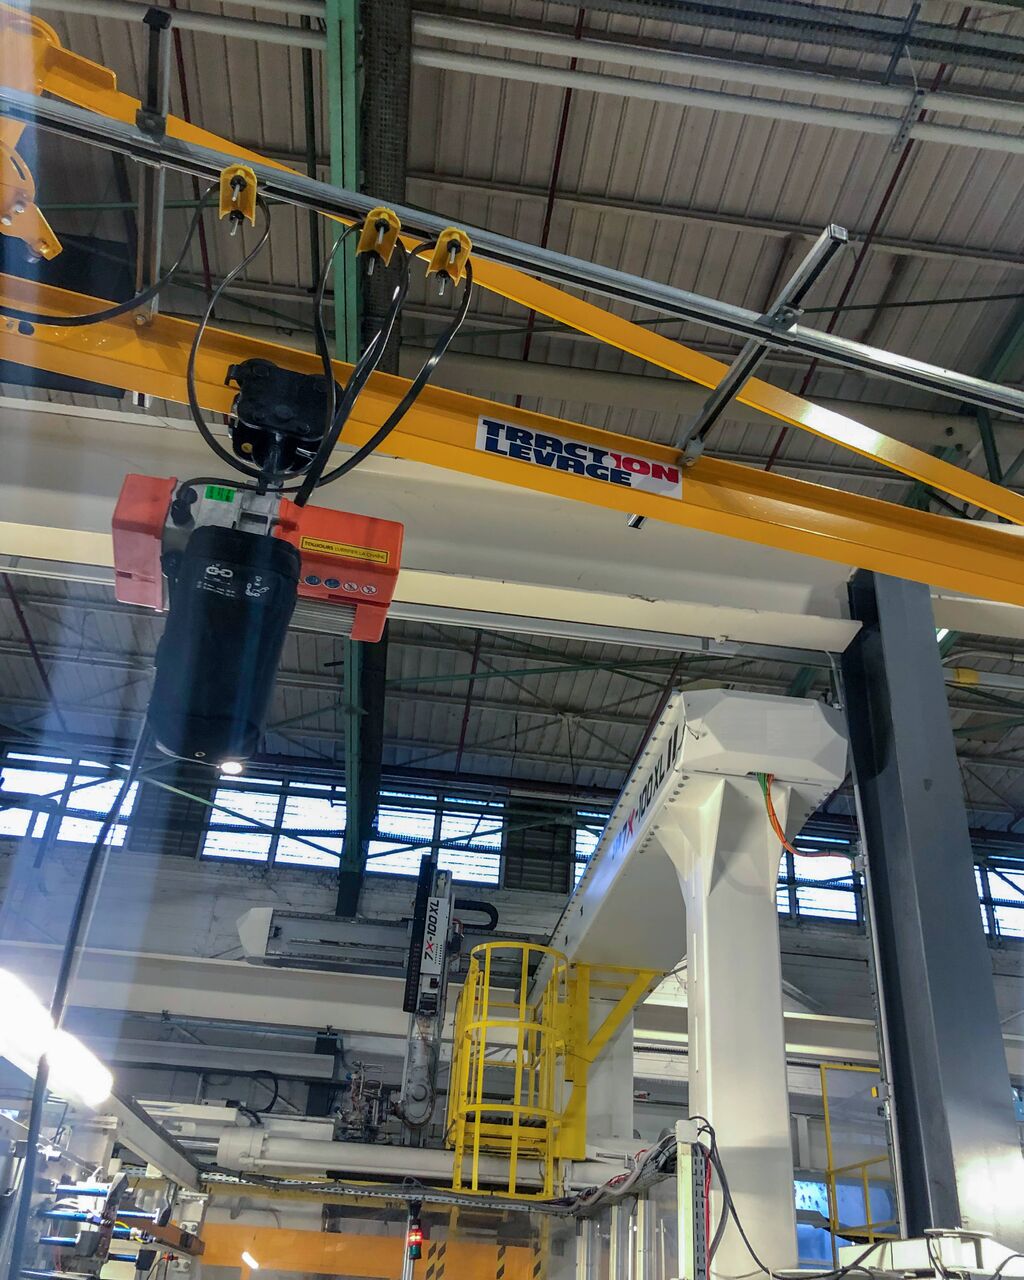 Jib crane for a production line